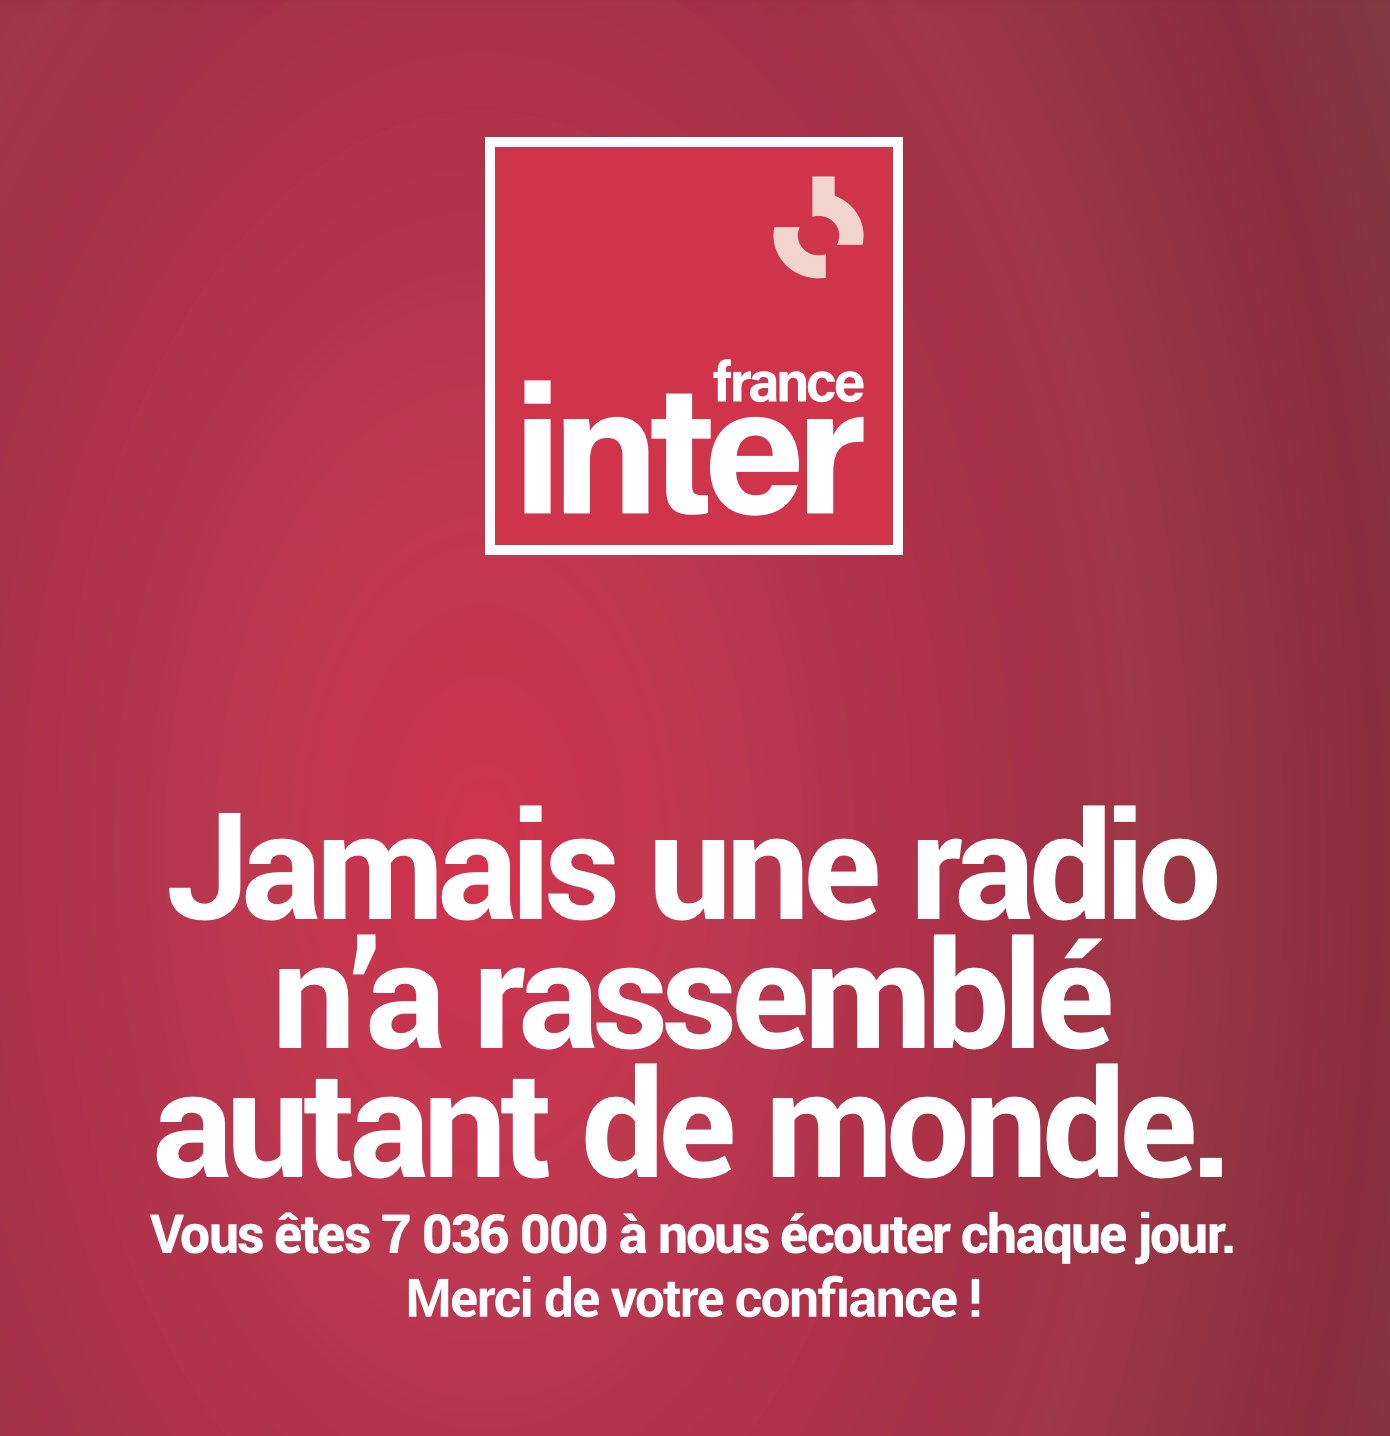 radio - audience radio - France Inter  -